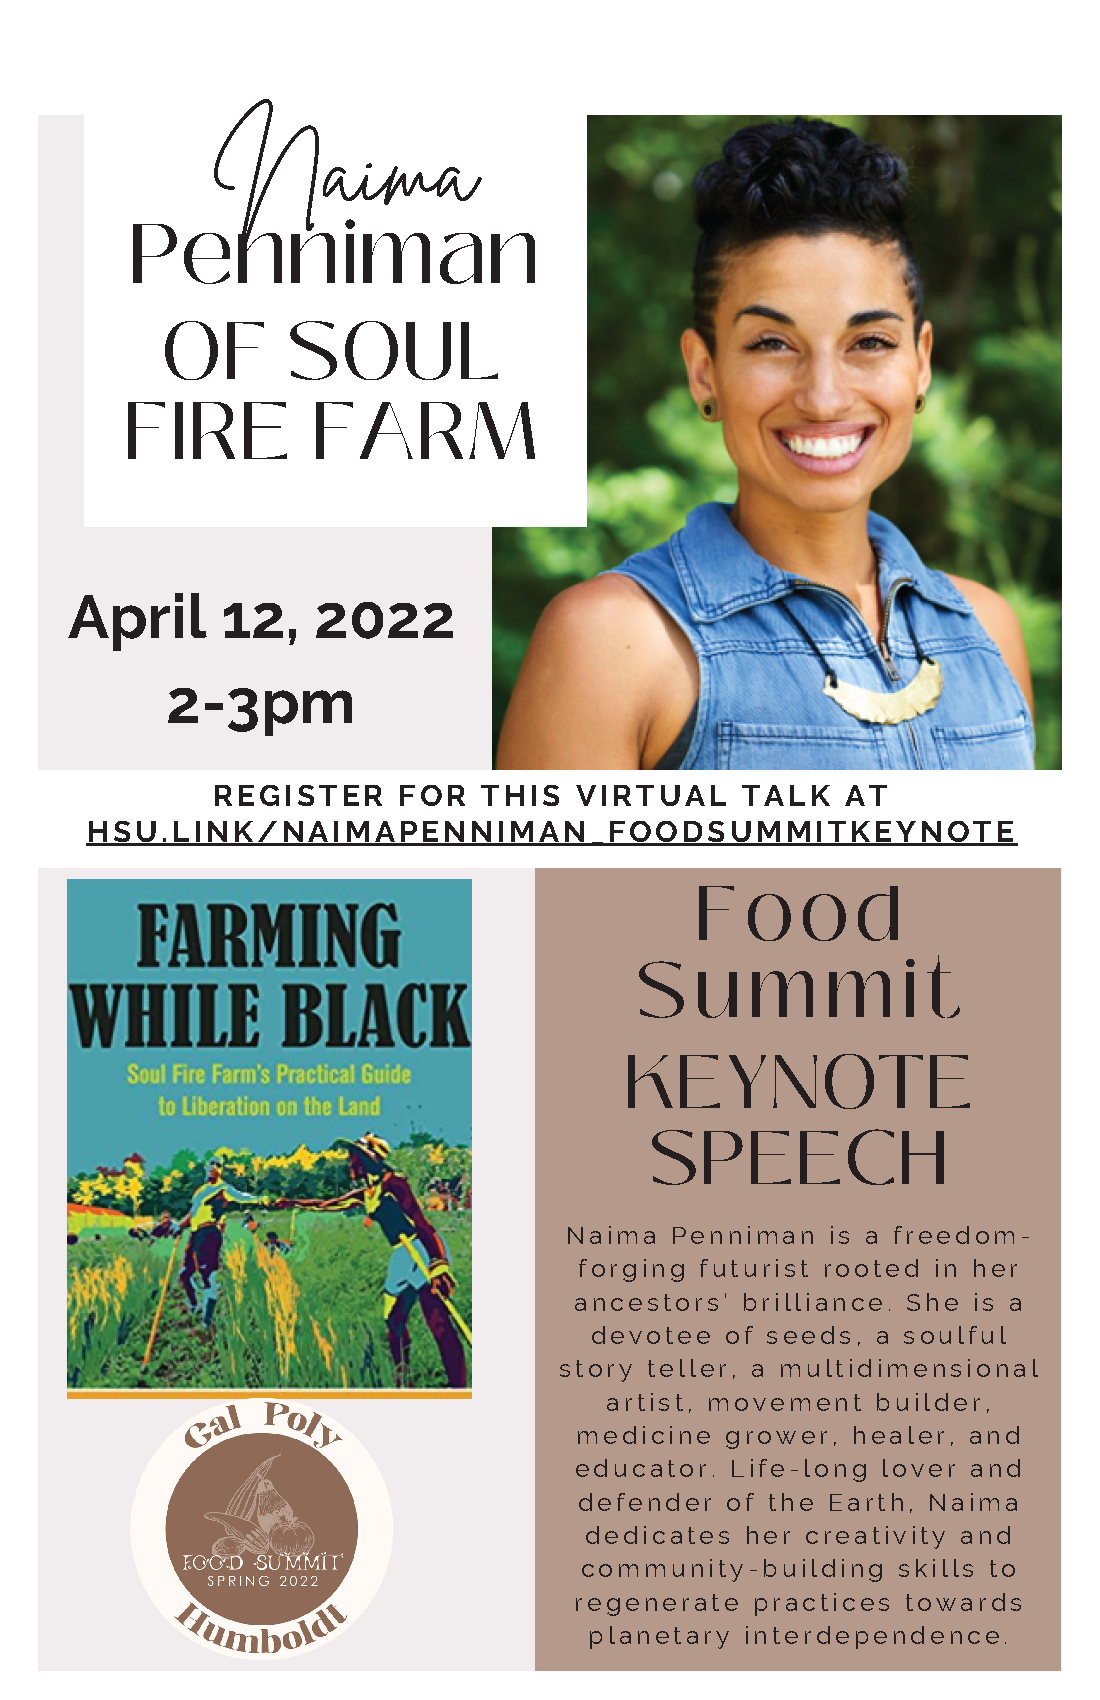 Virtual Screening Keynote Speech by Naima Penniman from Soul Fire Farm April 12th, 2-3pm Register for this talk at https://hsu.link/naimapenniman_foodsummitkeynote